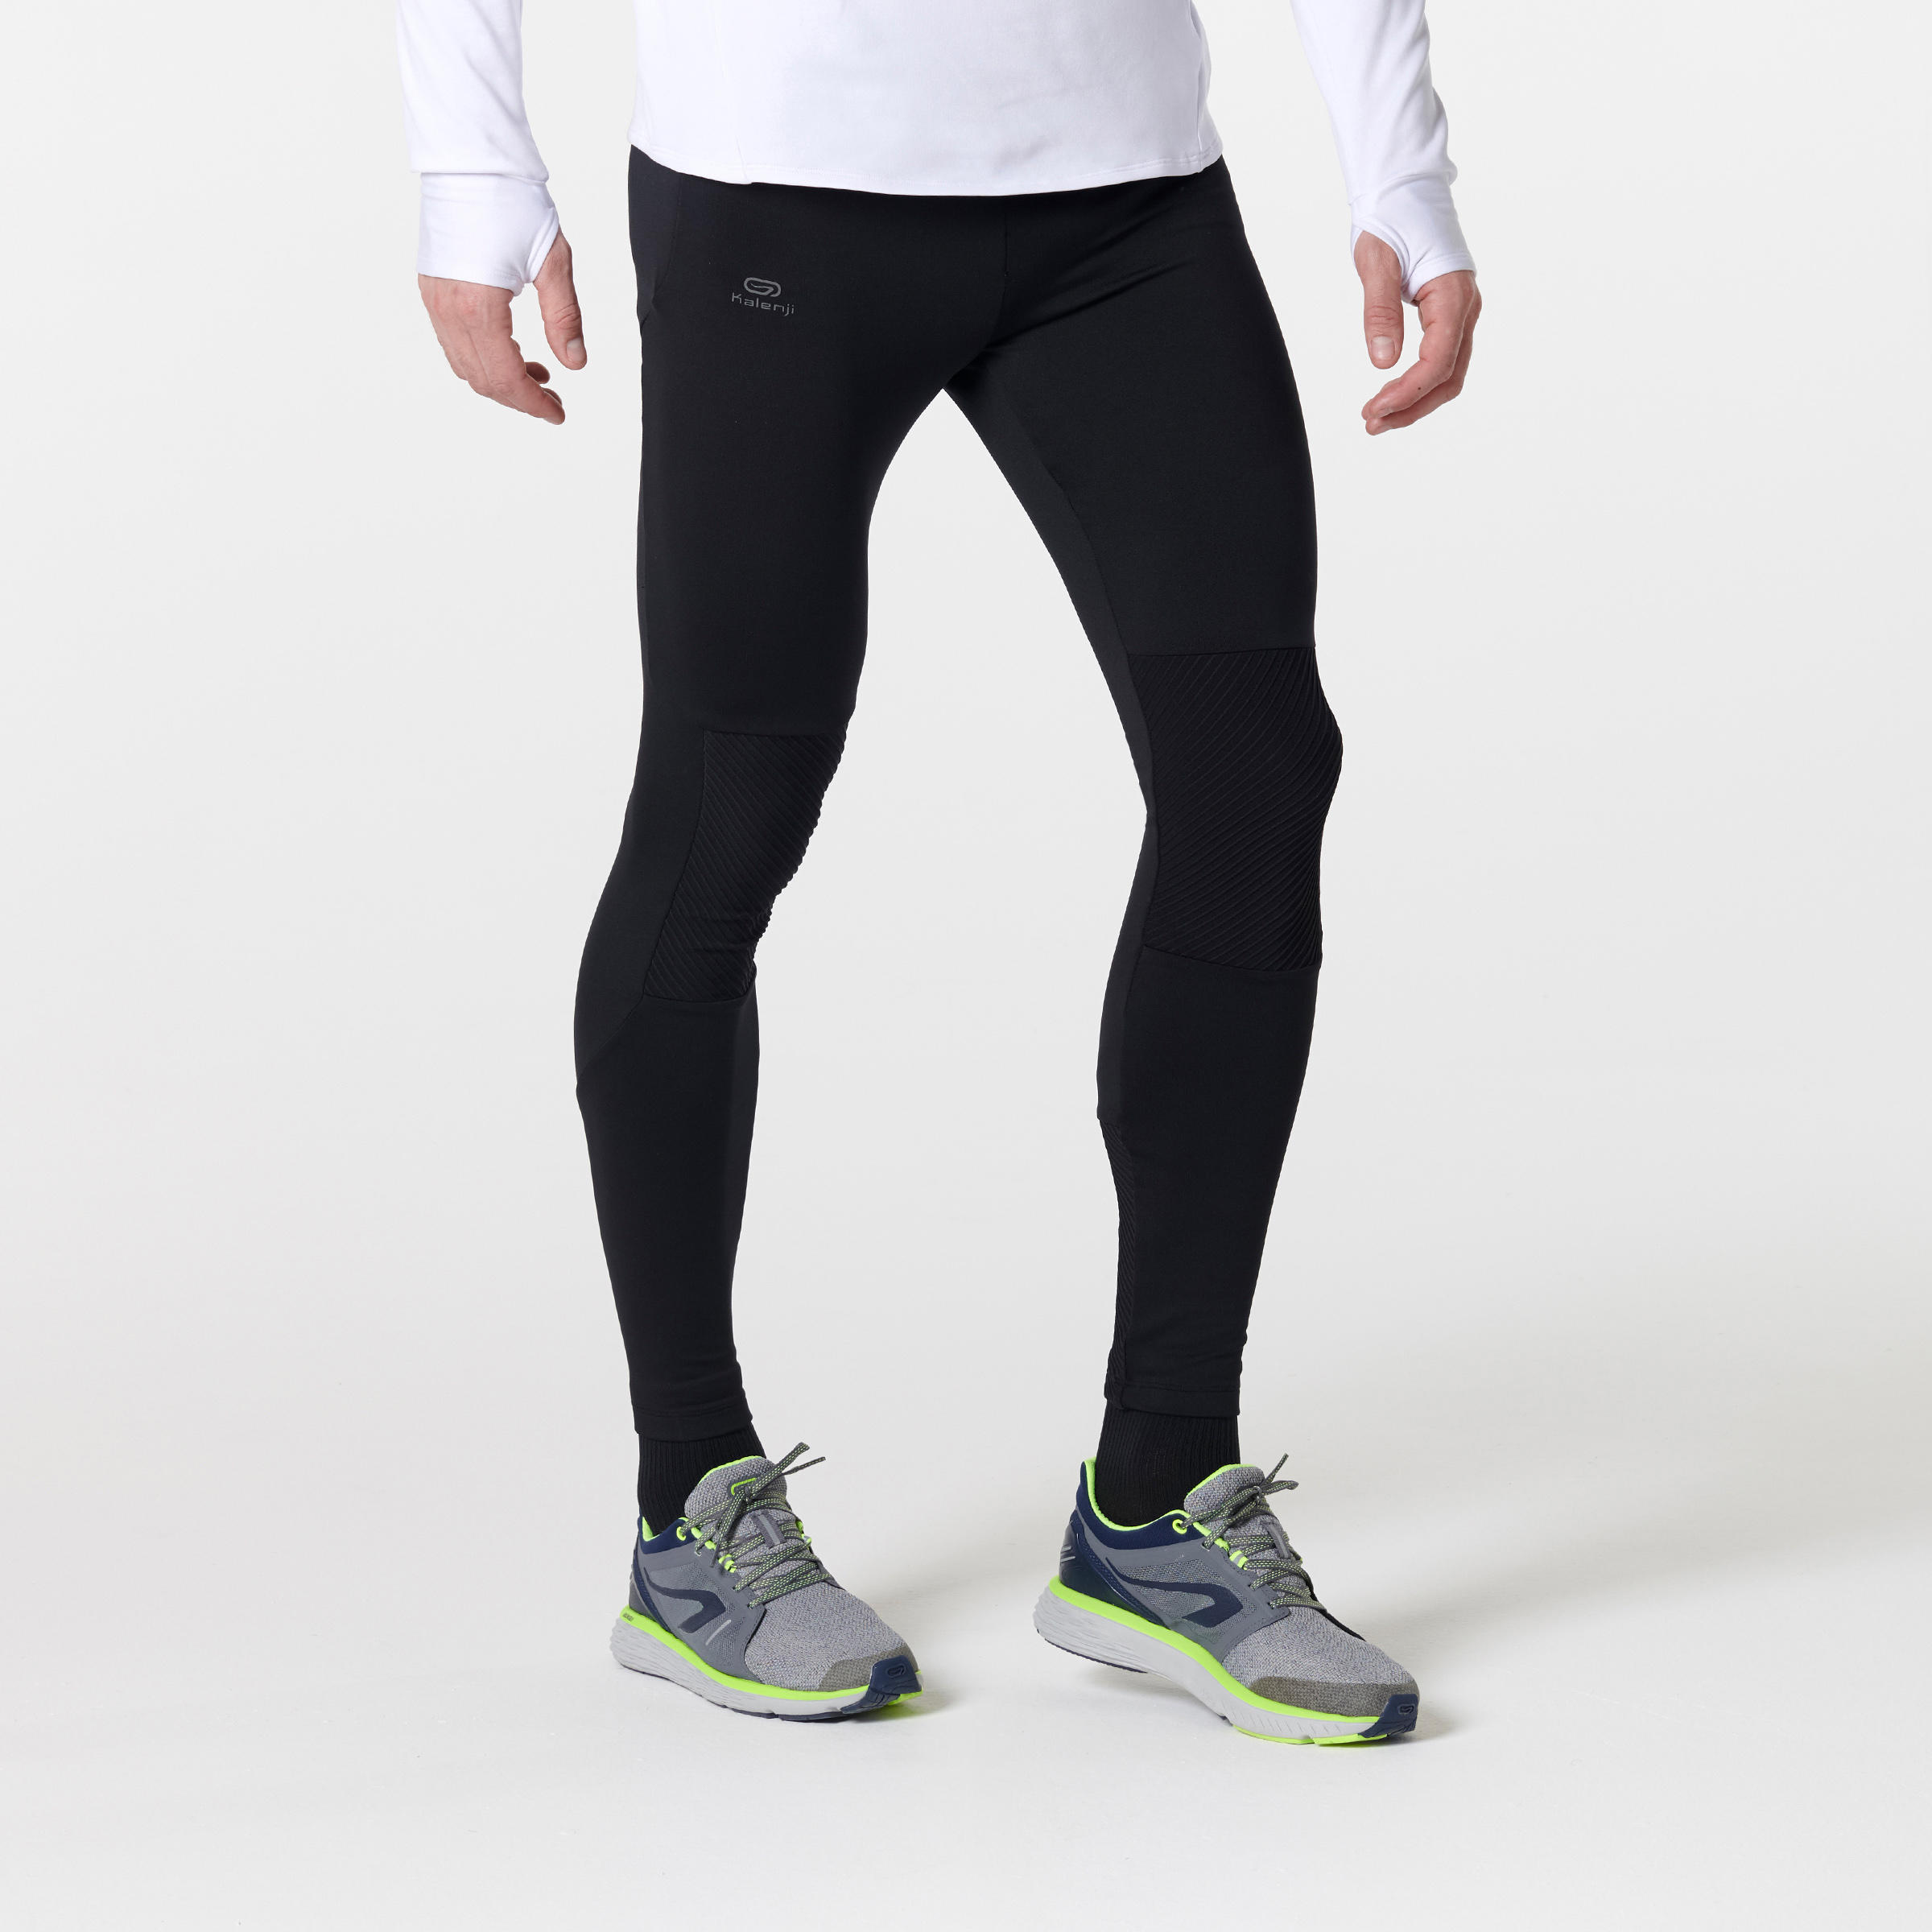 Decathlon - Kalenji Run Dry+, Running T-Shirt, Men's - Walmart.com